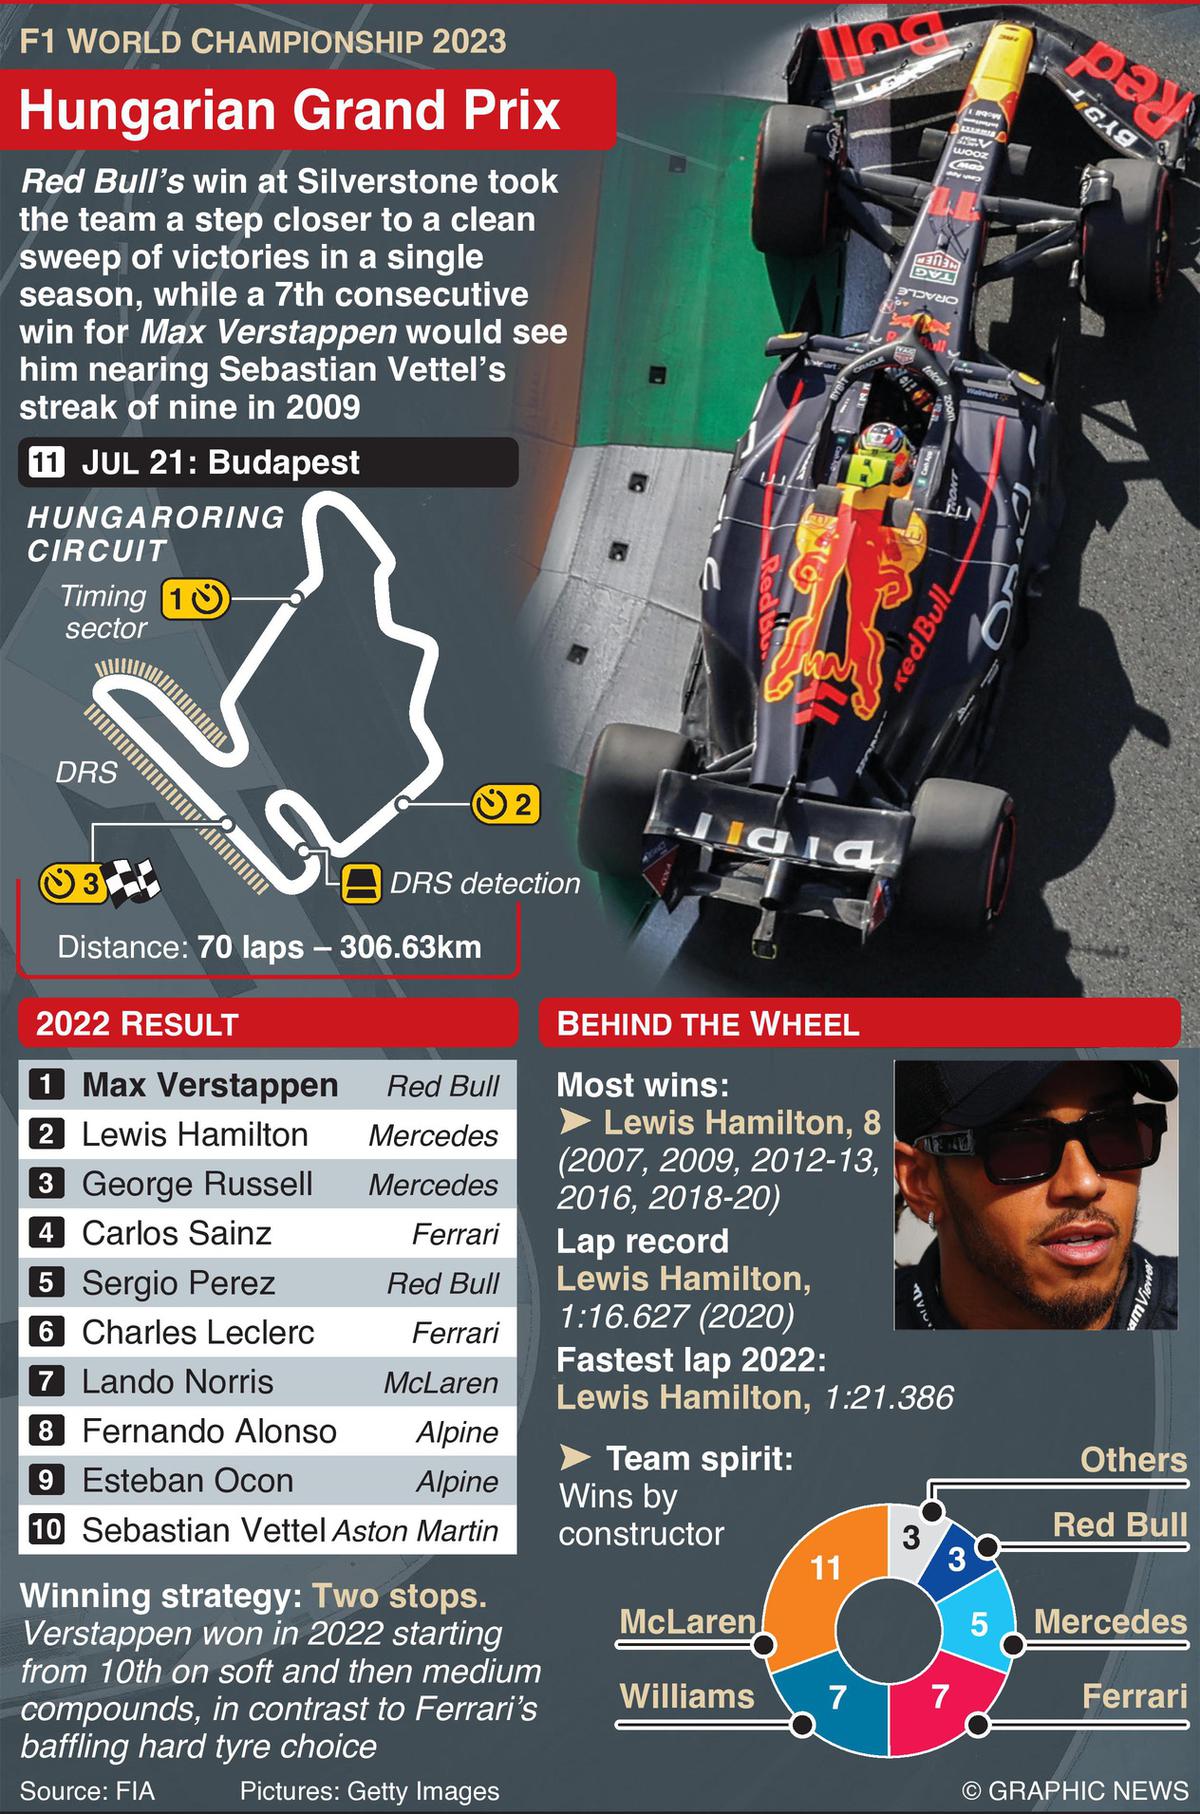 Hungarian Grand Prix 2023 Red Bull, Max Verstappen look to continue hot streak